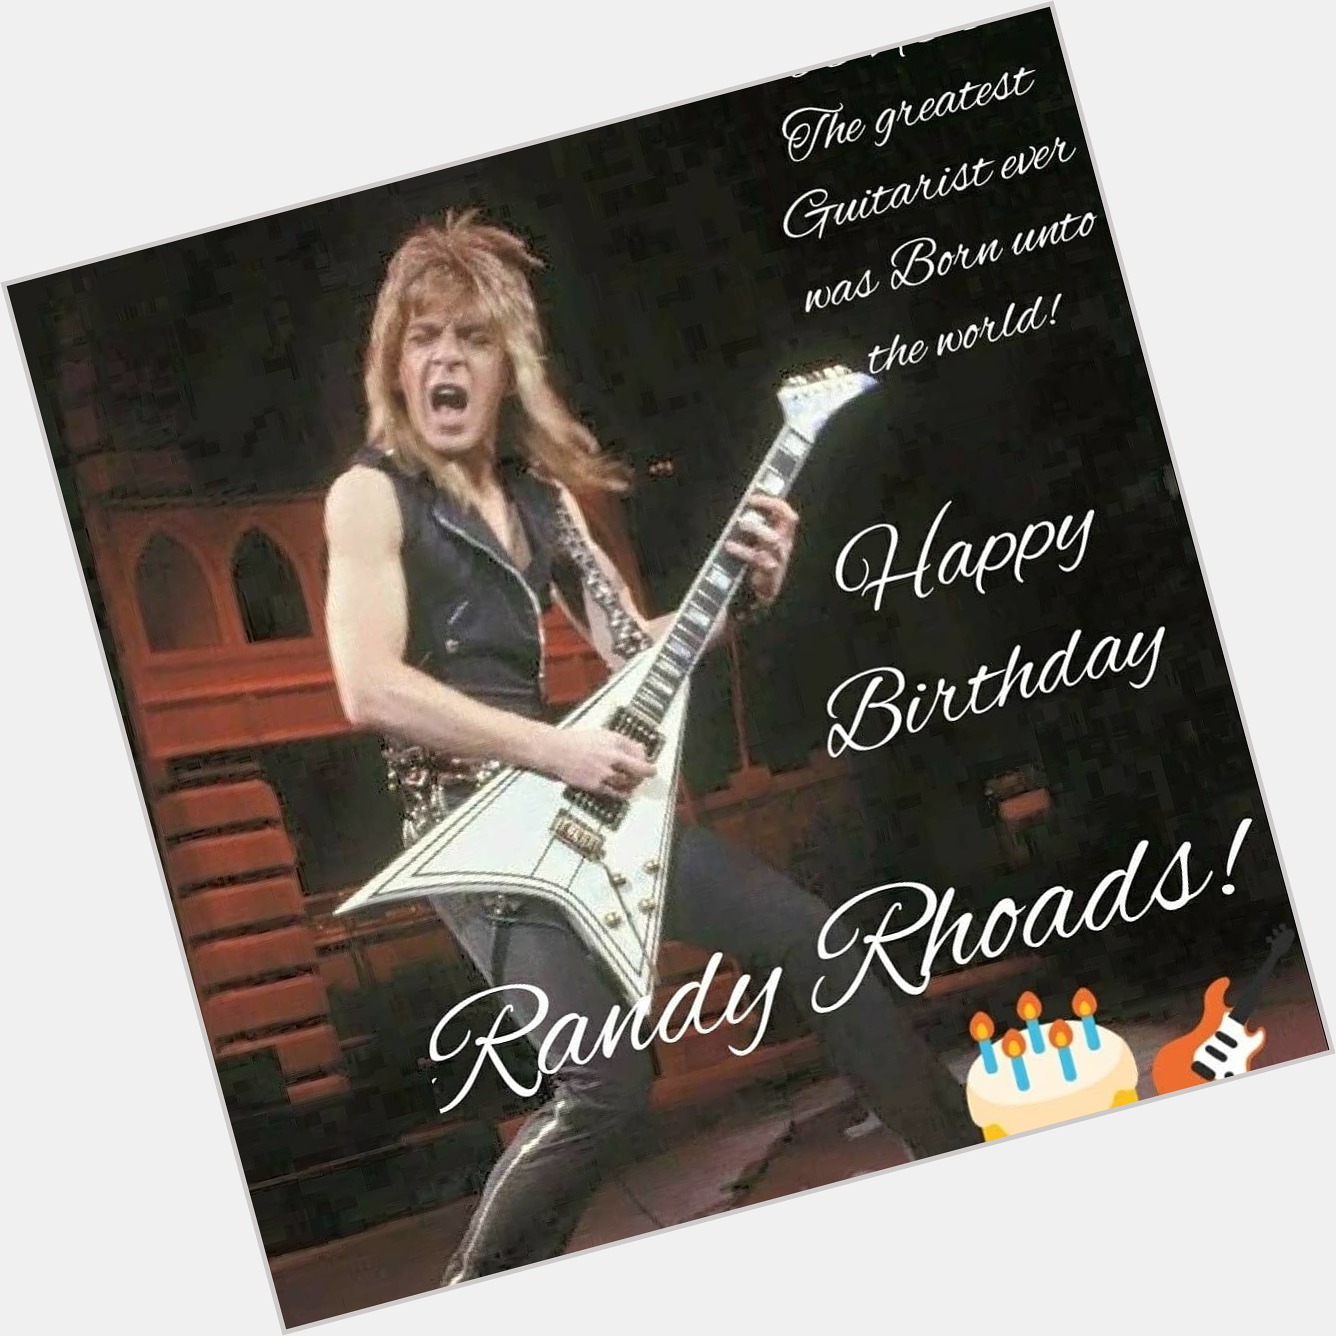 Happy Birthday Randy Rhoads. Gone, but never forgotten!    